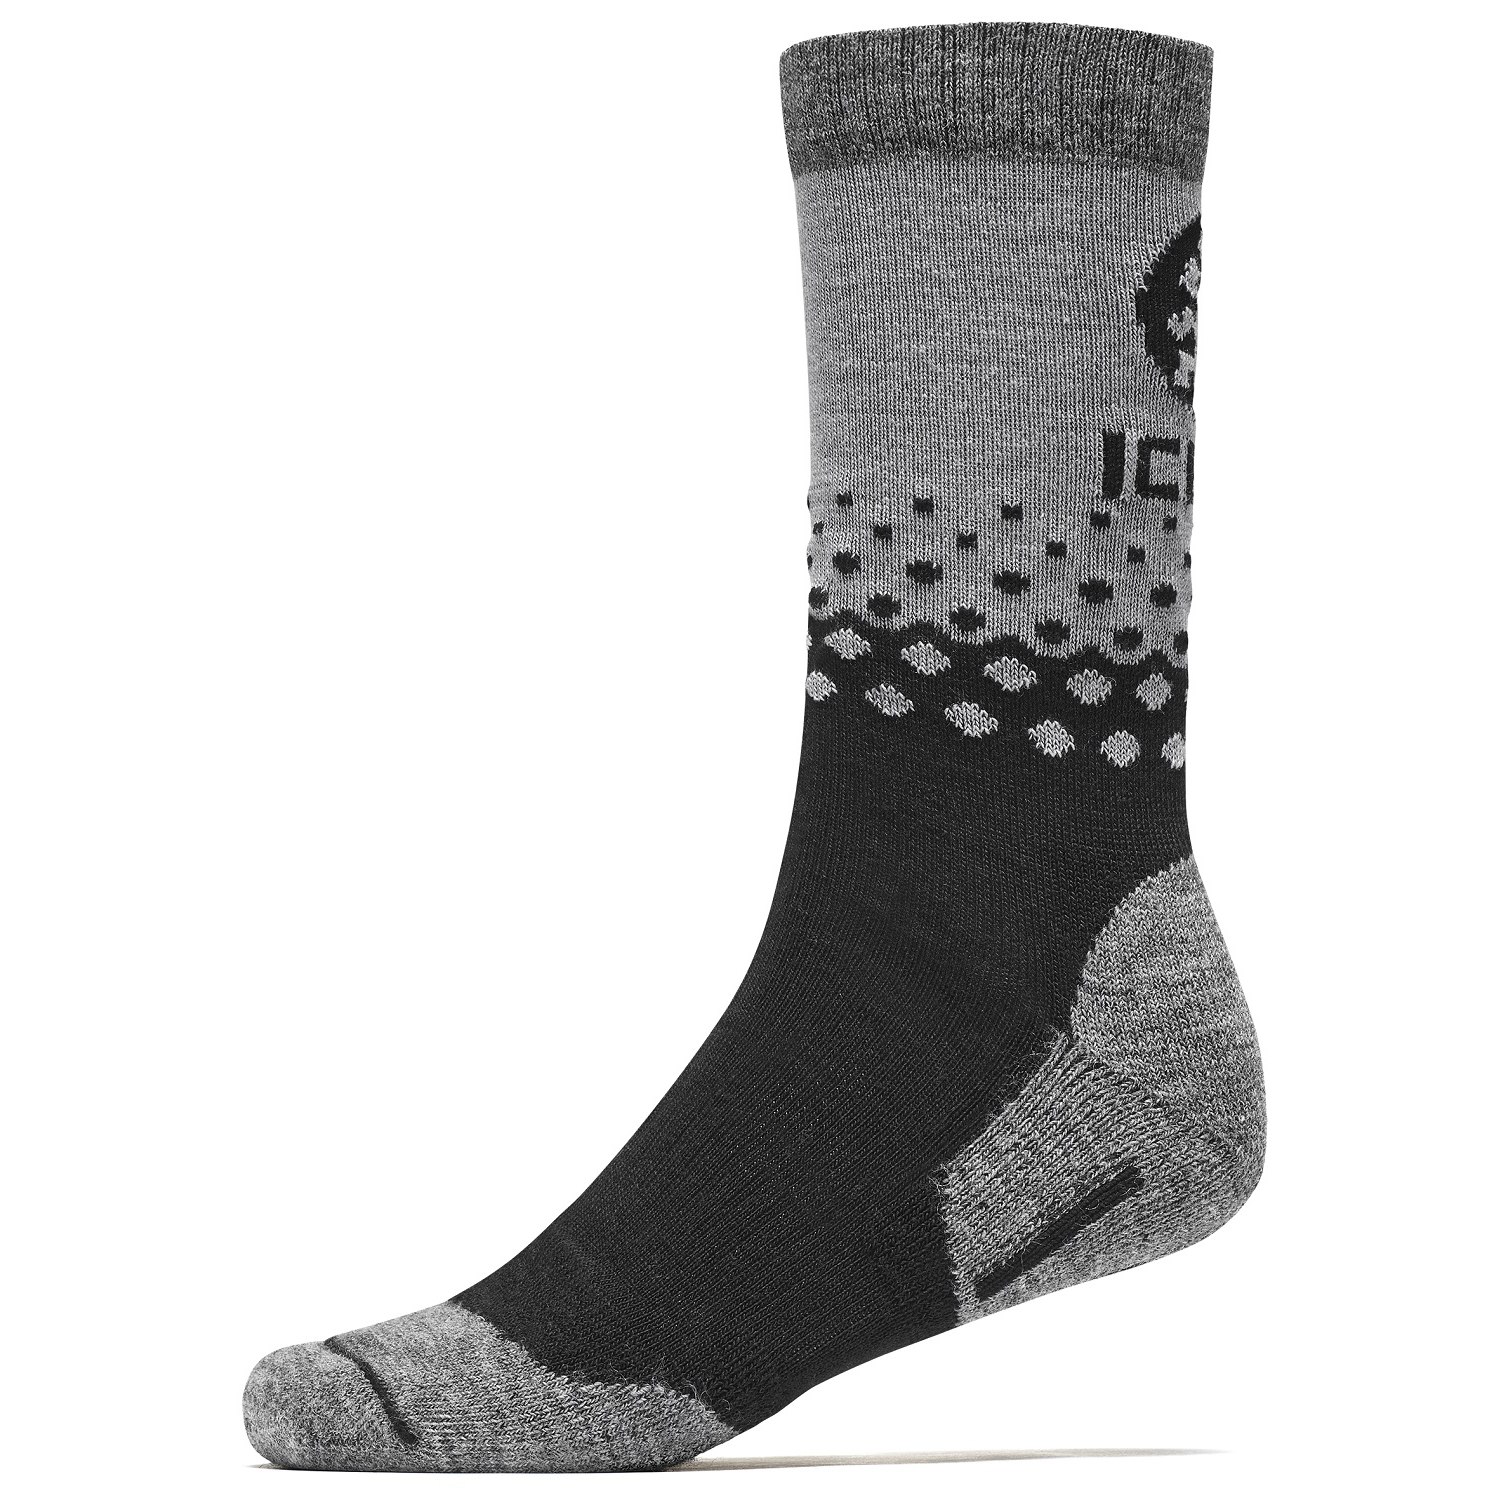 Productfoto van Icebug Warm Wool Socks - black/grey